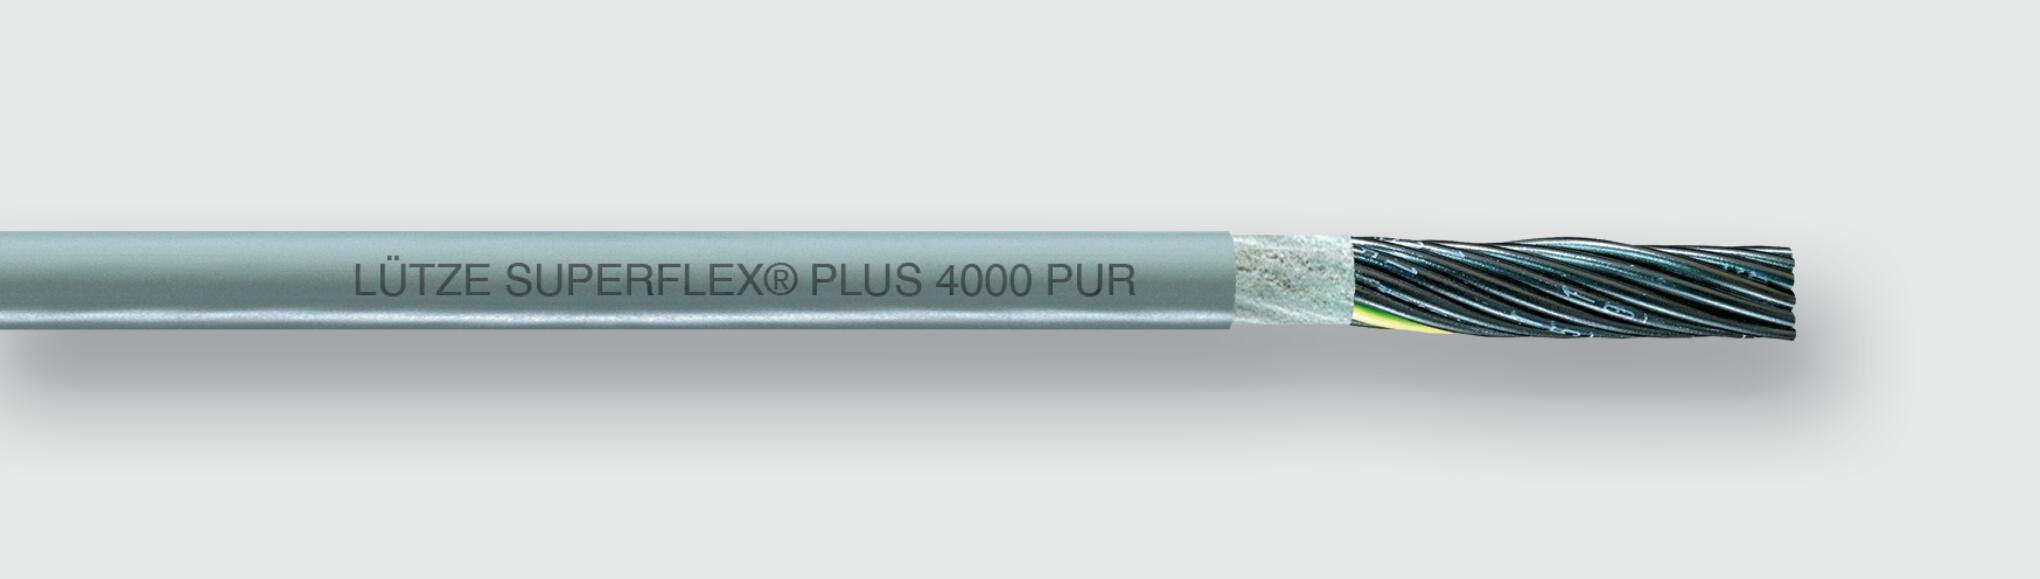 113113 - PUR control cables - C-track compatible